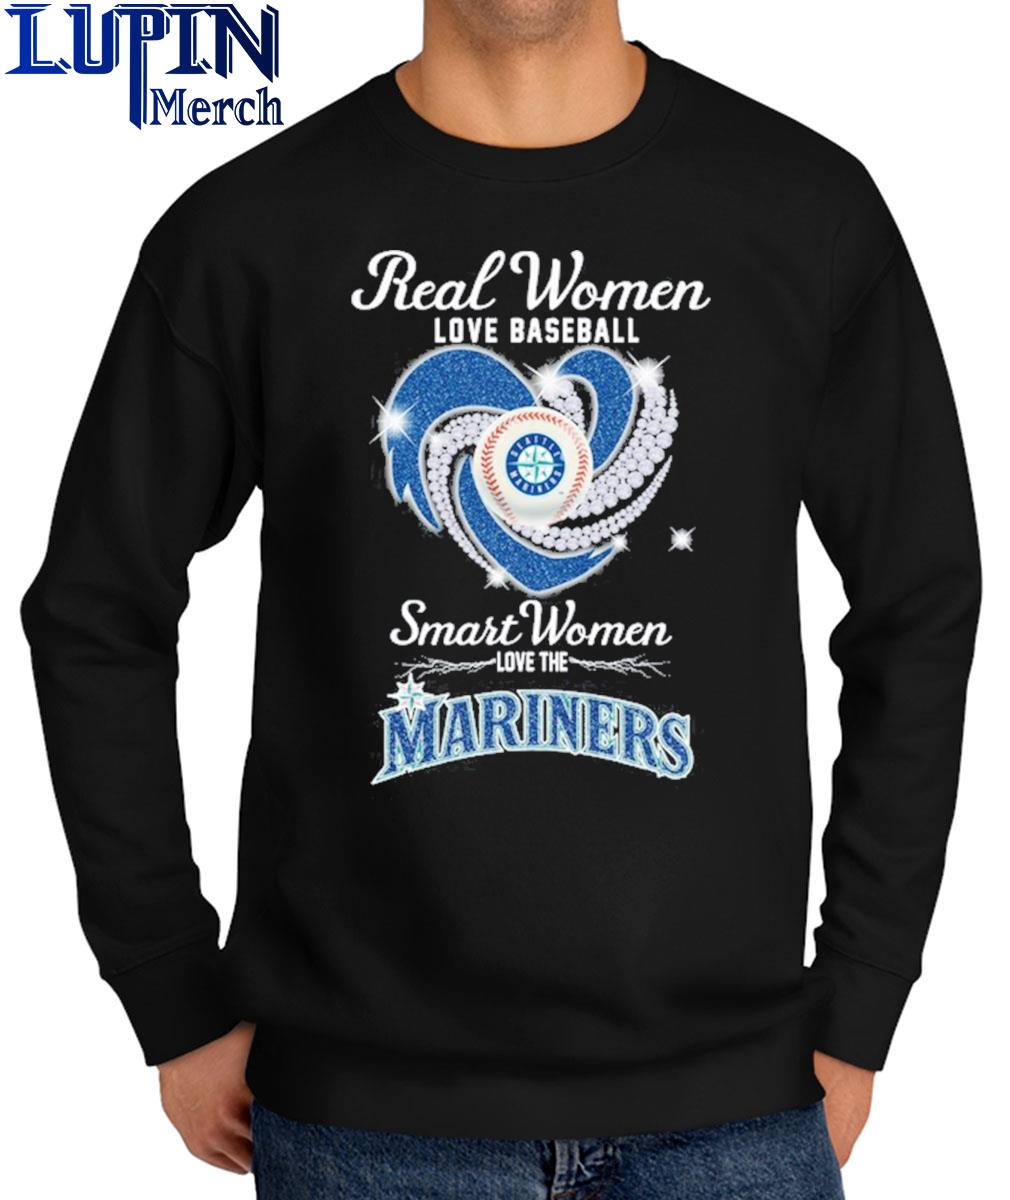 Heart This Girl Love Seattle Mariners Shirt, hoodie, sweater, long